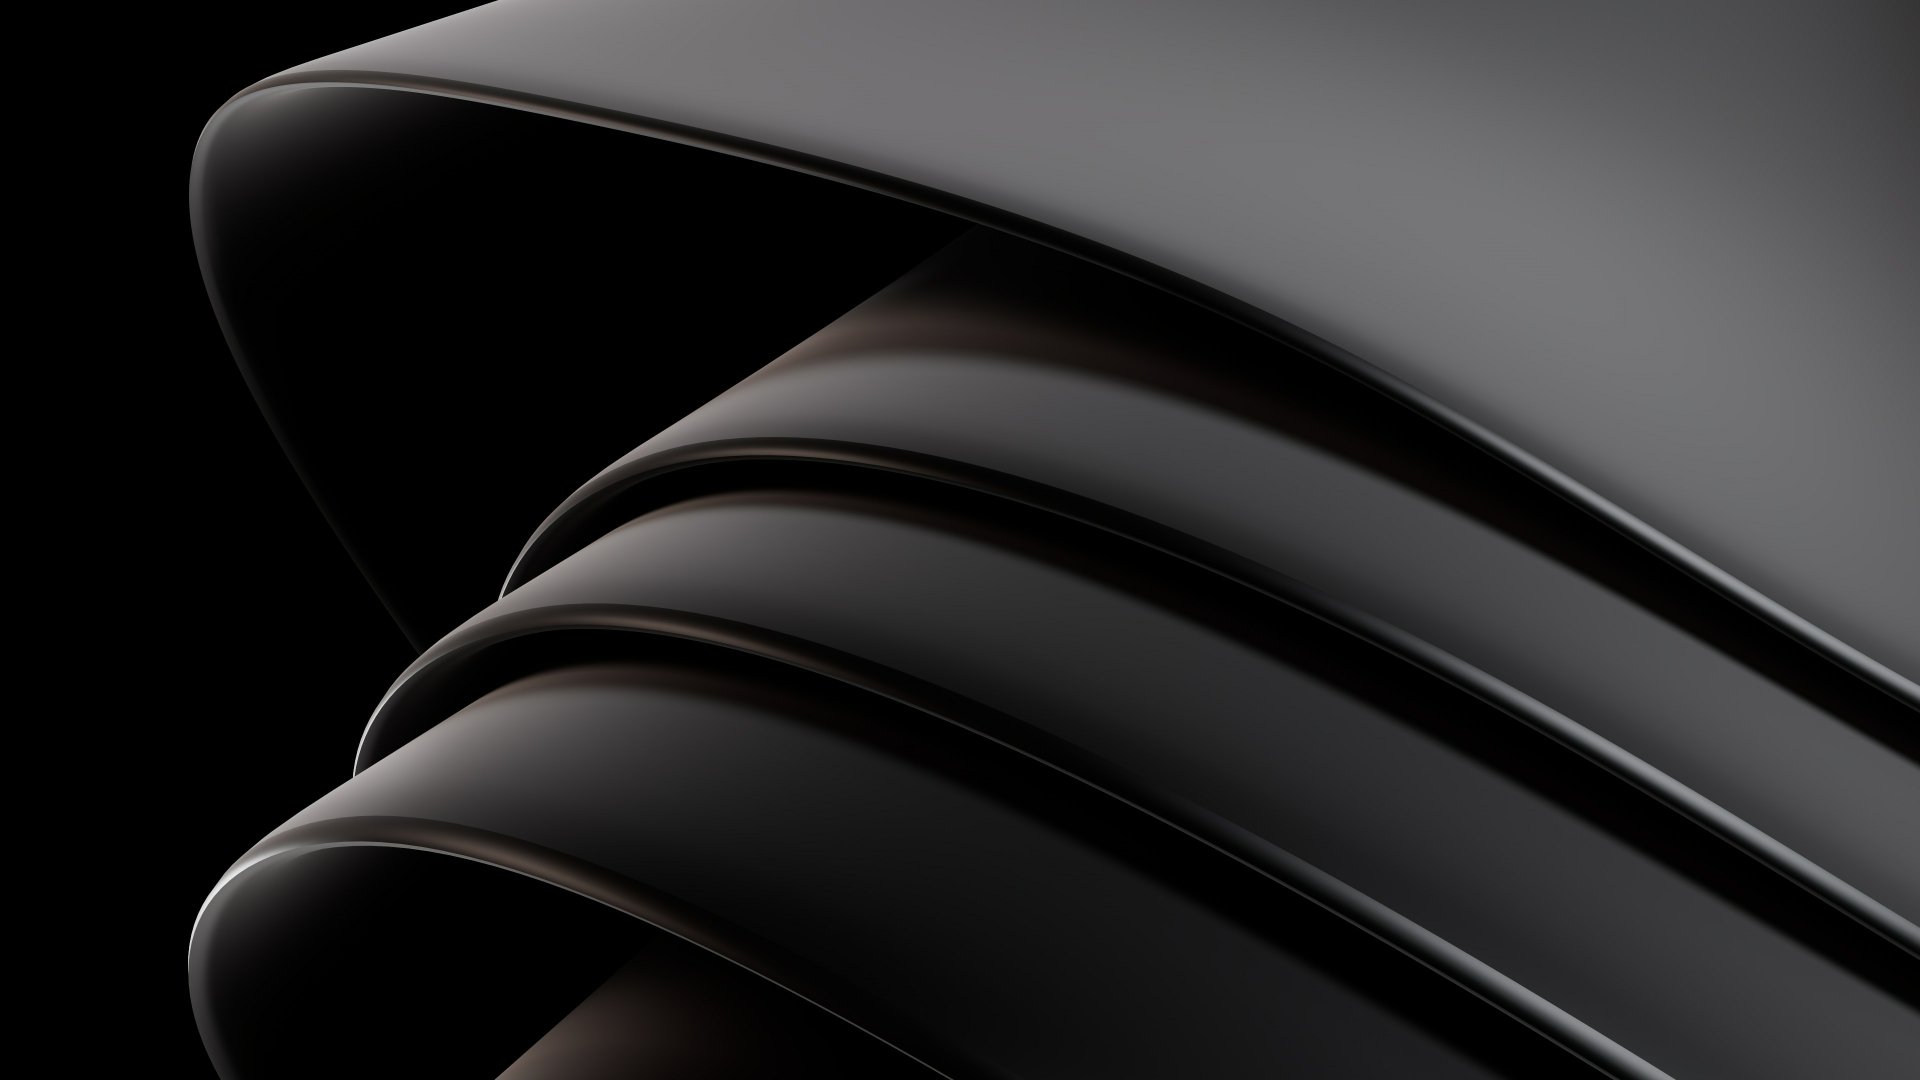 Abstract Black 4k Ultra HD Wallpaper by Andrew Kliatskyi